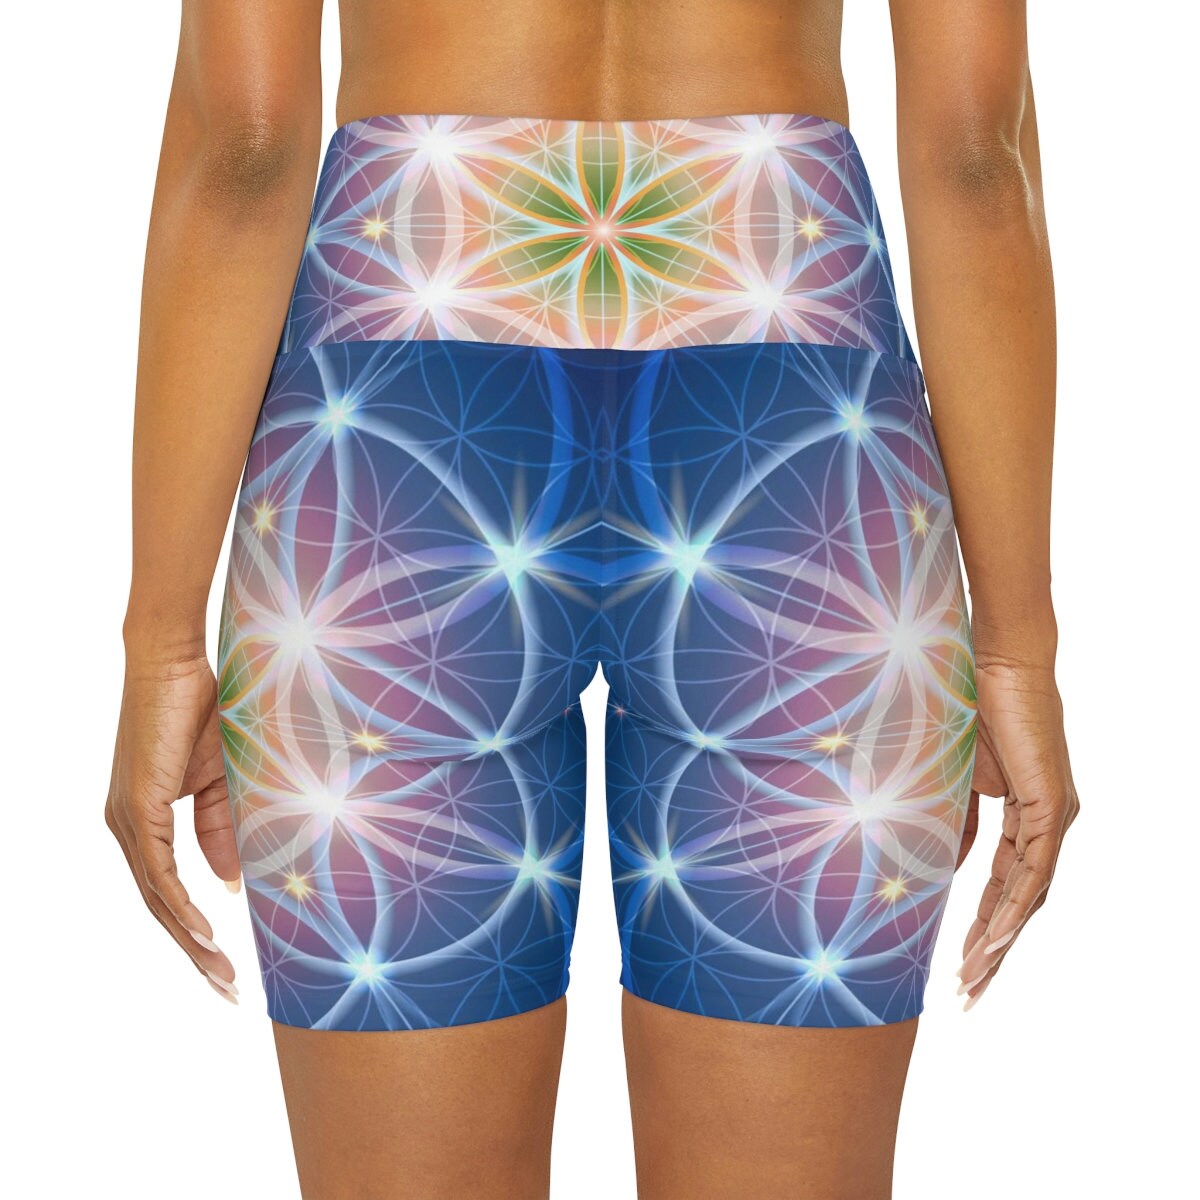 Blue Flower of Life yoga pants sacred geometry legging yoga pants capri ankle length shorts leggings spiritual pants